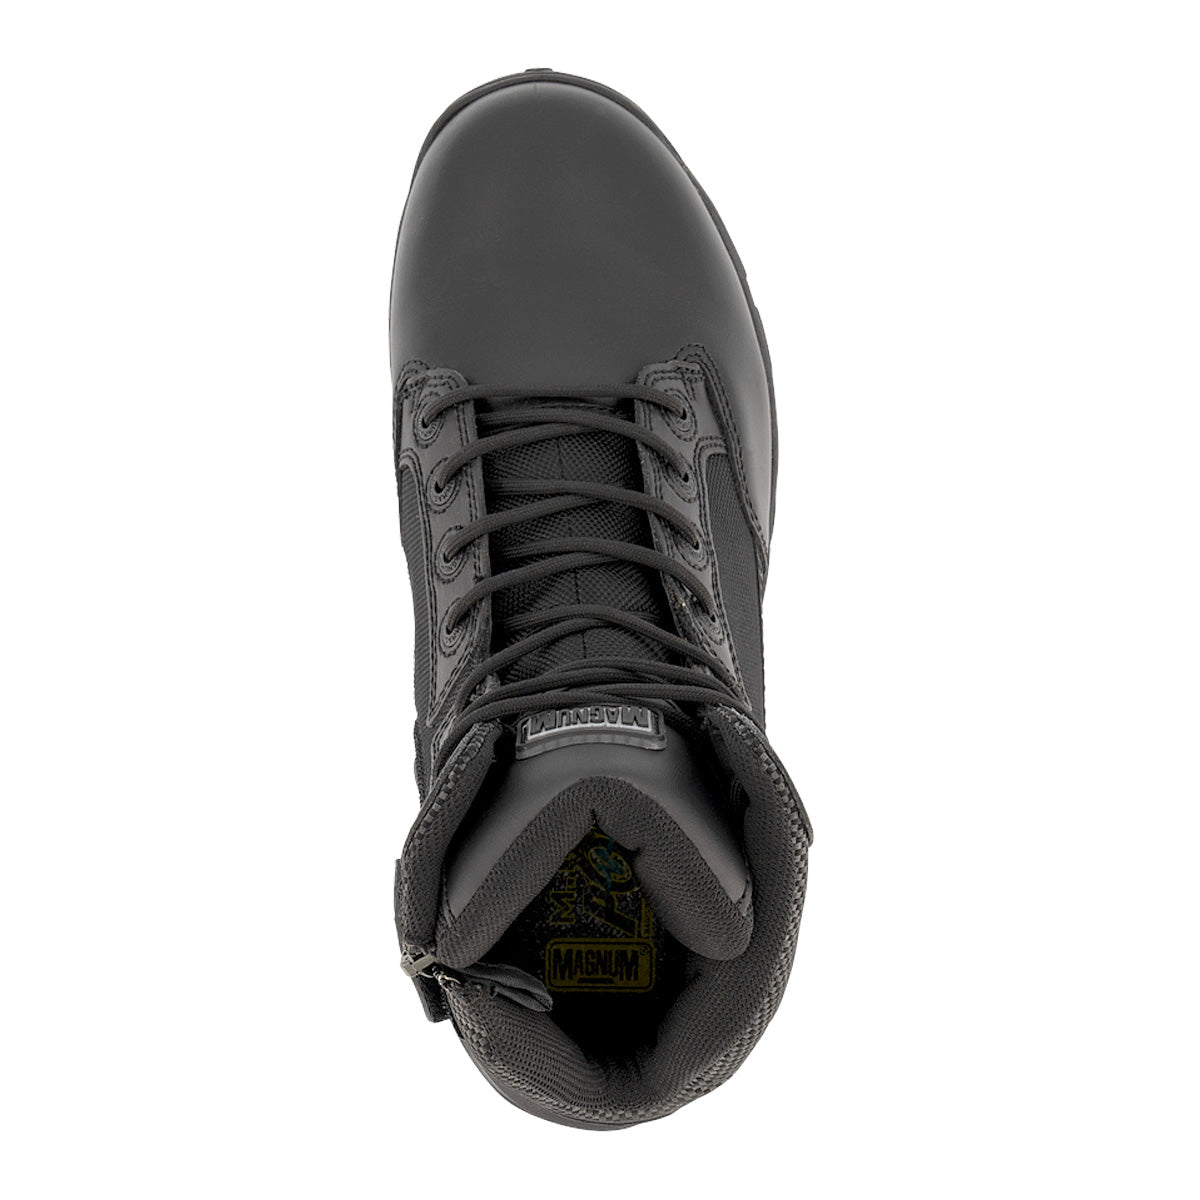 Magnum Strike Force 6.0 Side-Zip Composite Toe Women's Boot Black Footwear Magnum Footwear Tactical Gear Supplier Tactical Distributors Australia